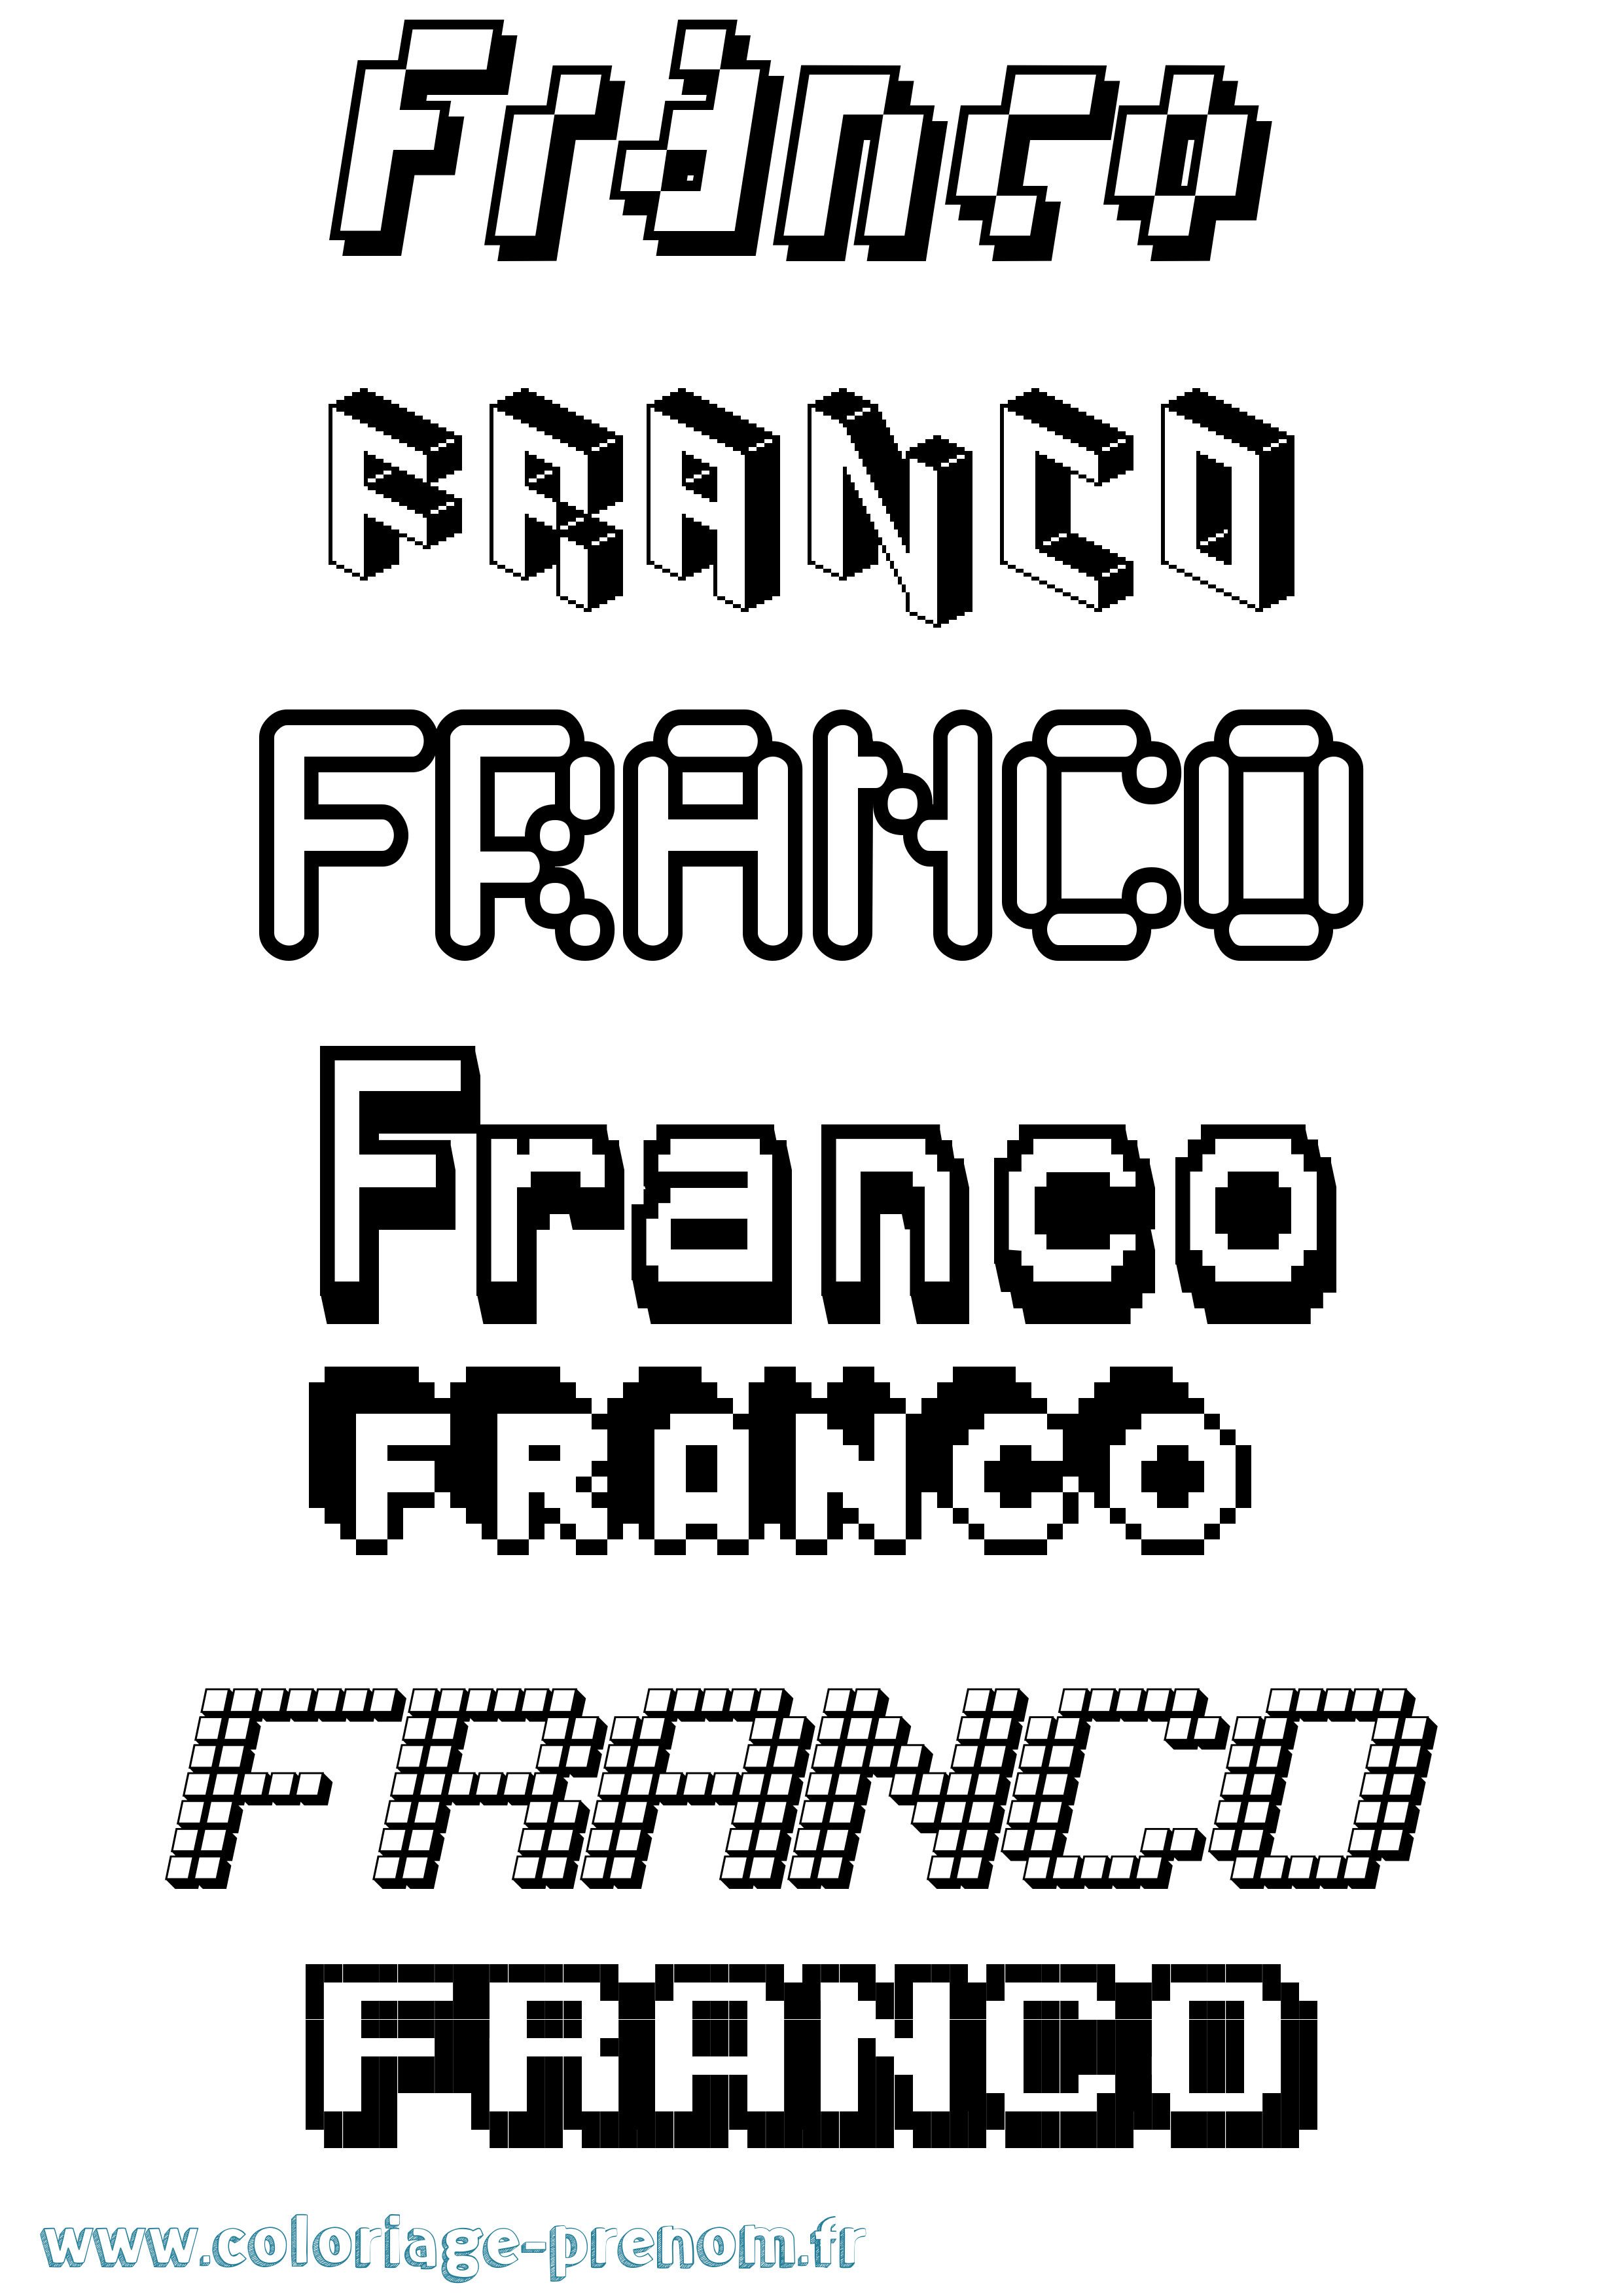 Coloriage prénom Franco Pixel